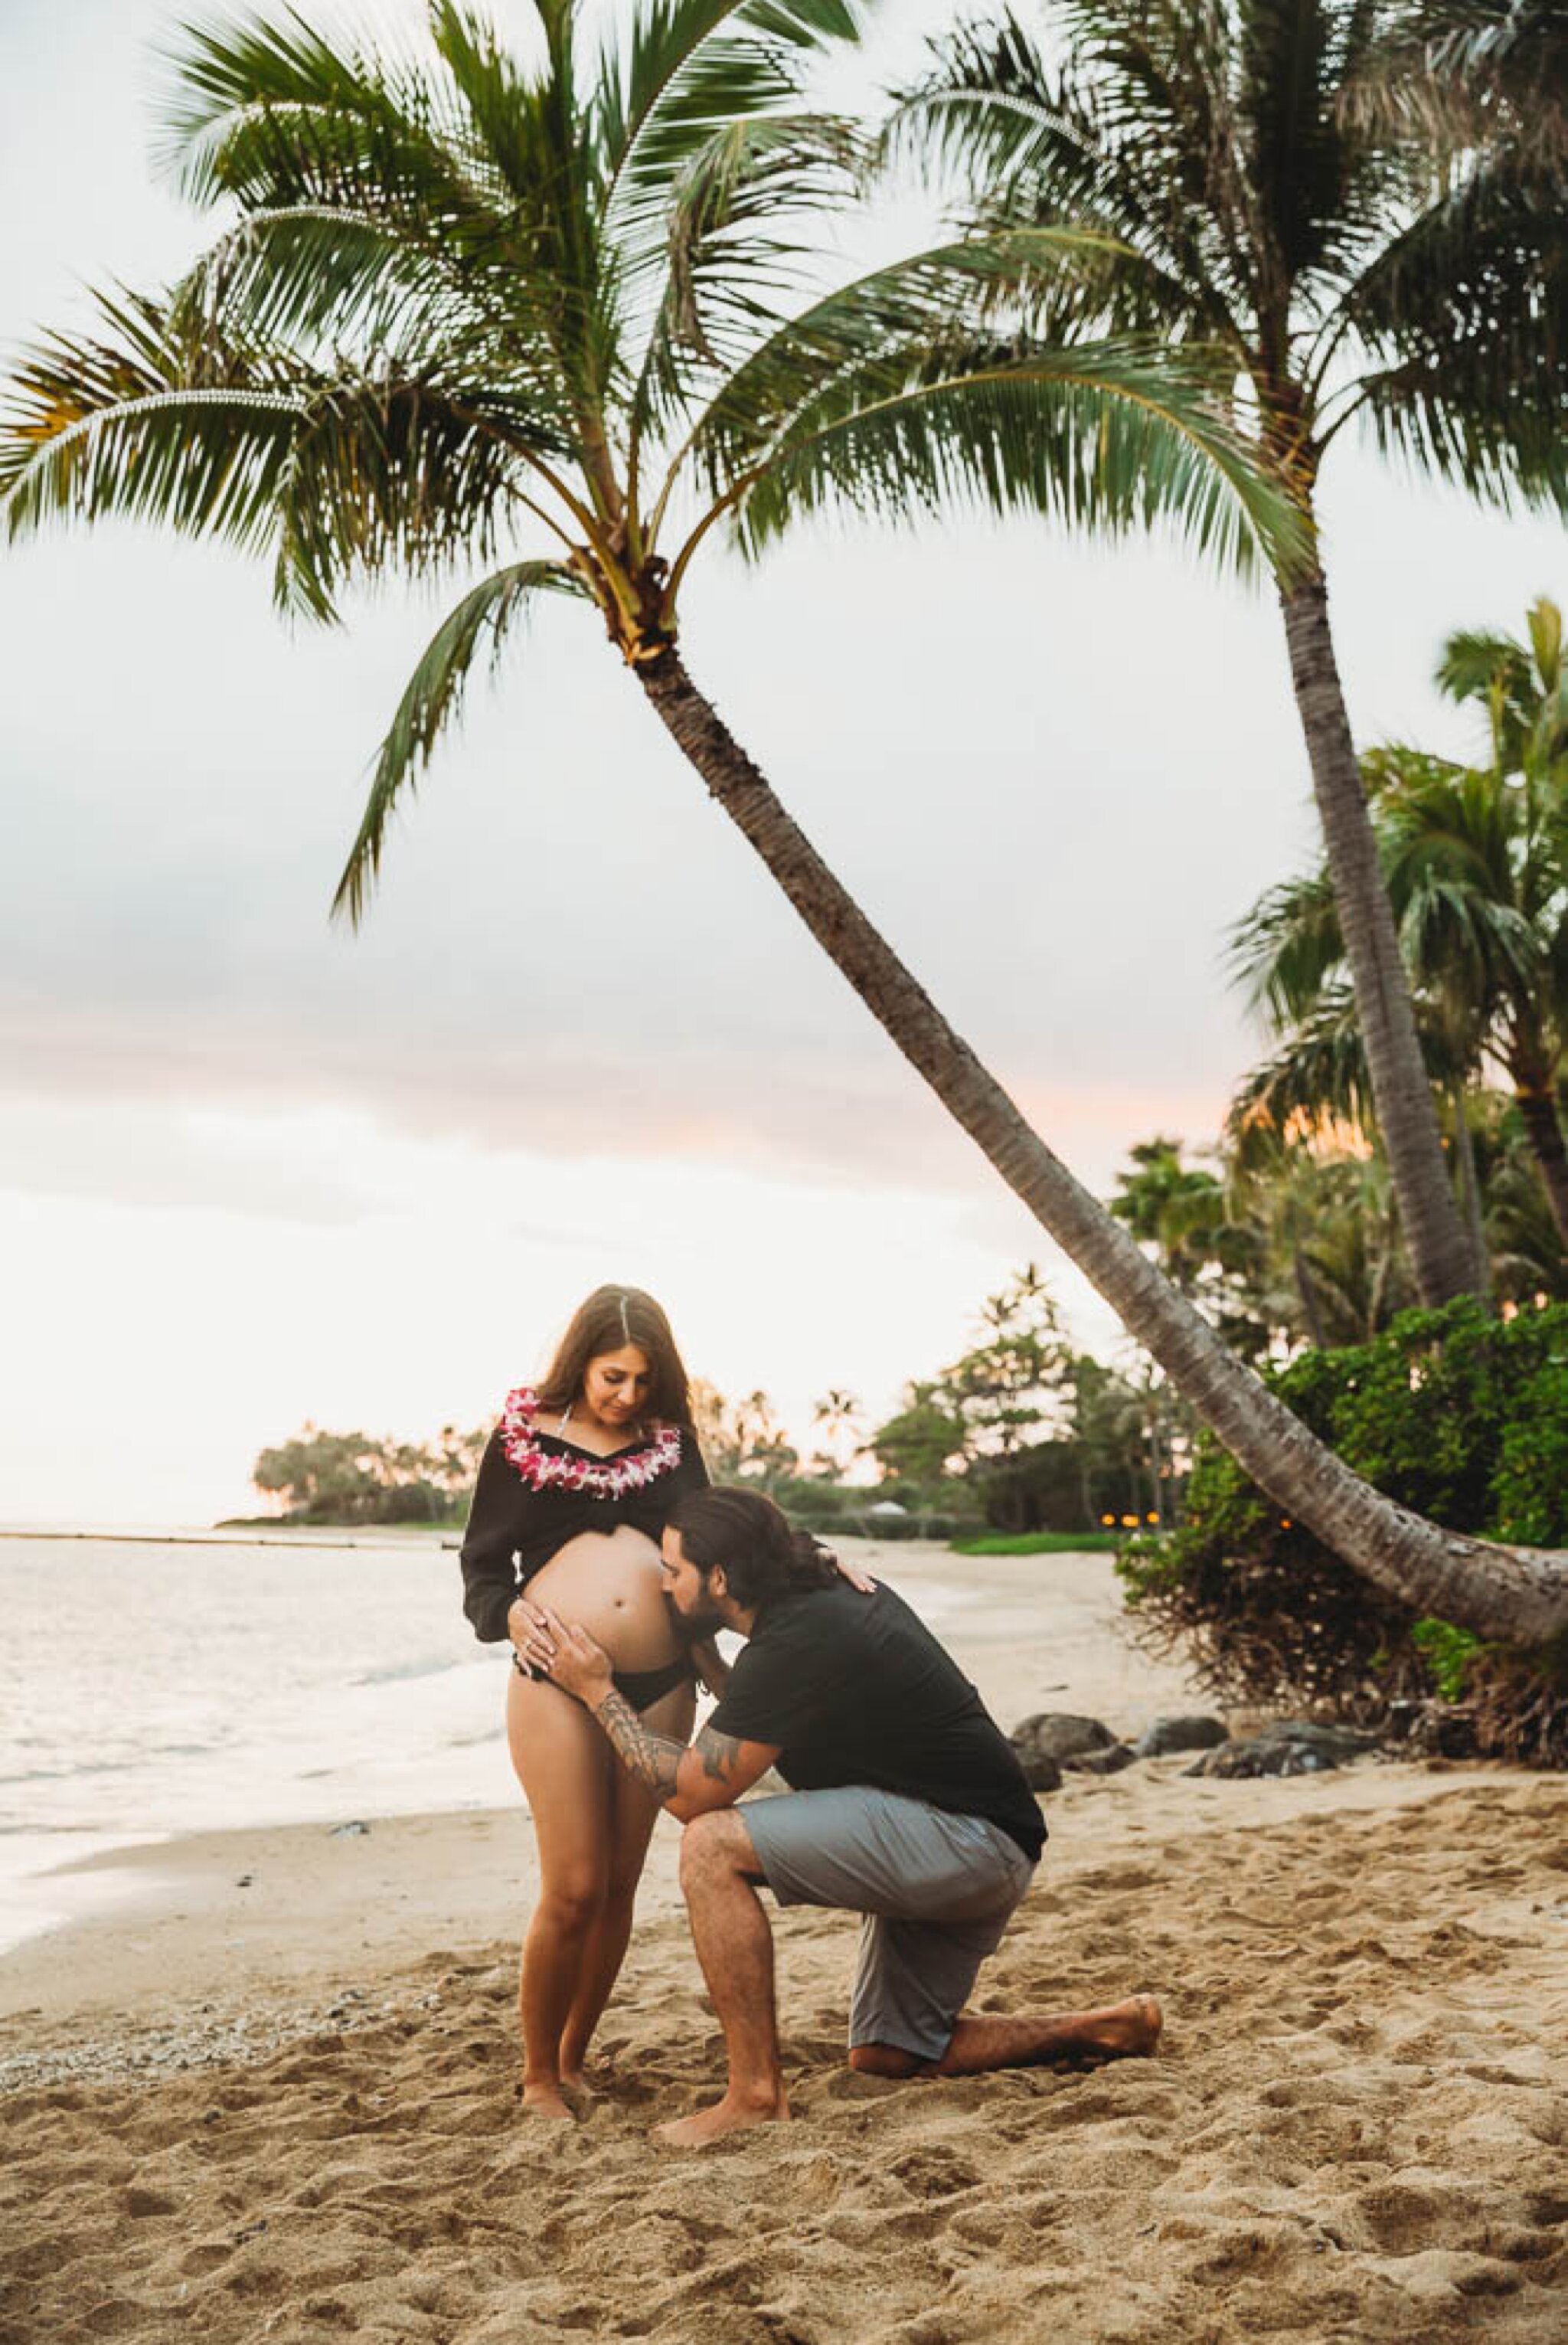 Sunset Maternity Photography Session at Kahala Beach in Oahu - Hawaii Family Photographer - Johanna Dye 29.jpg